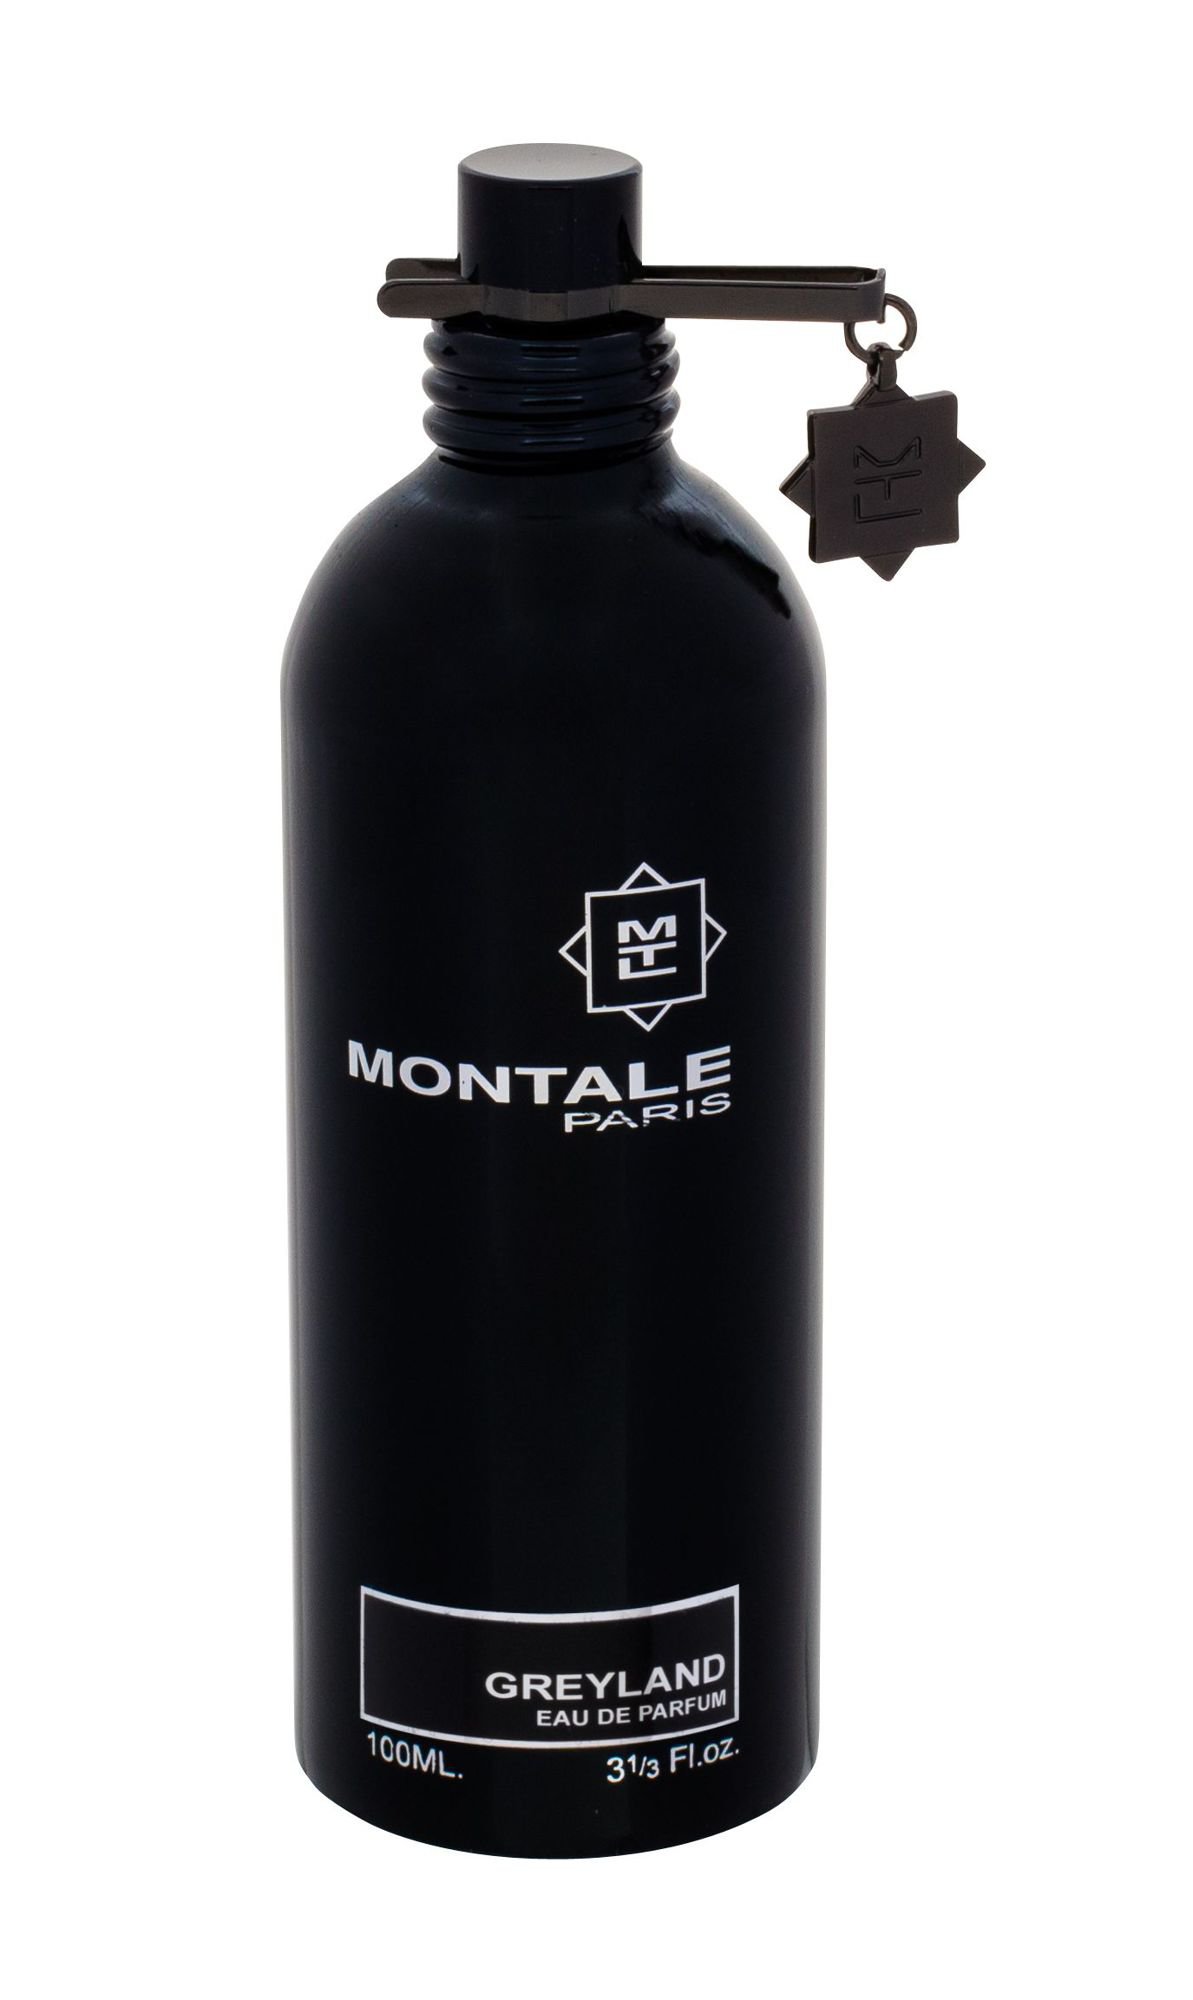 Montale Paris Greyland, edp 100ml